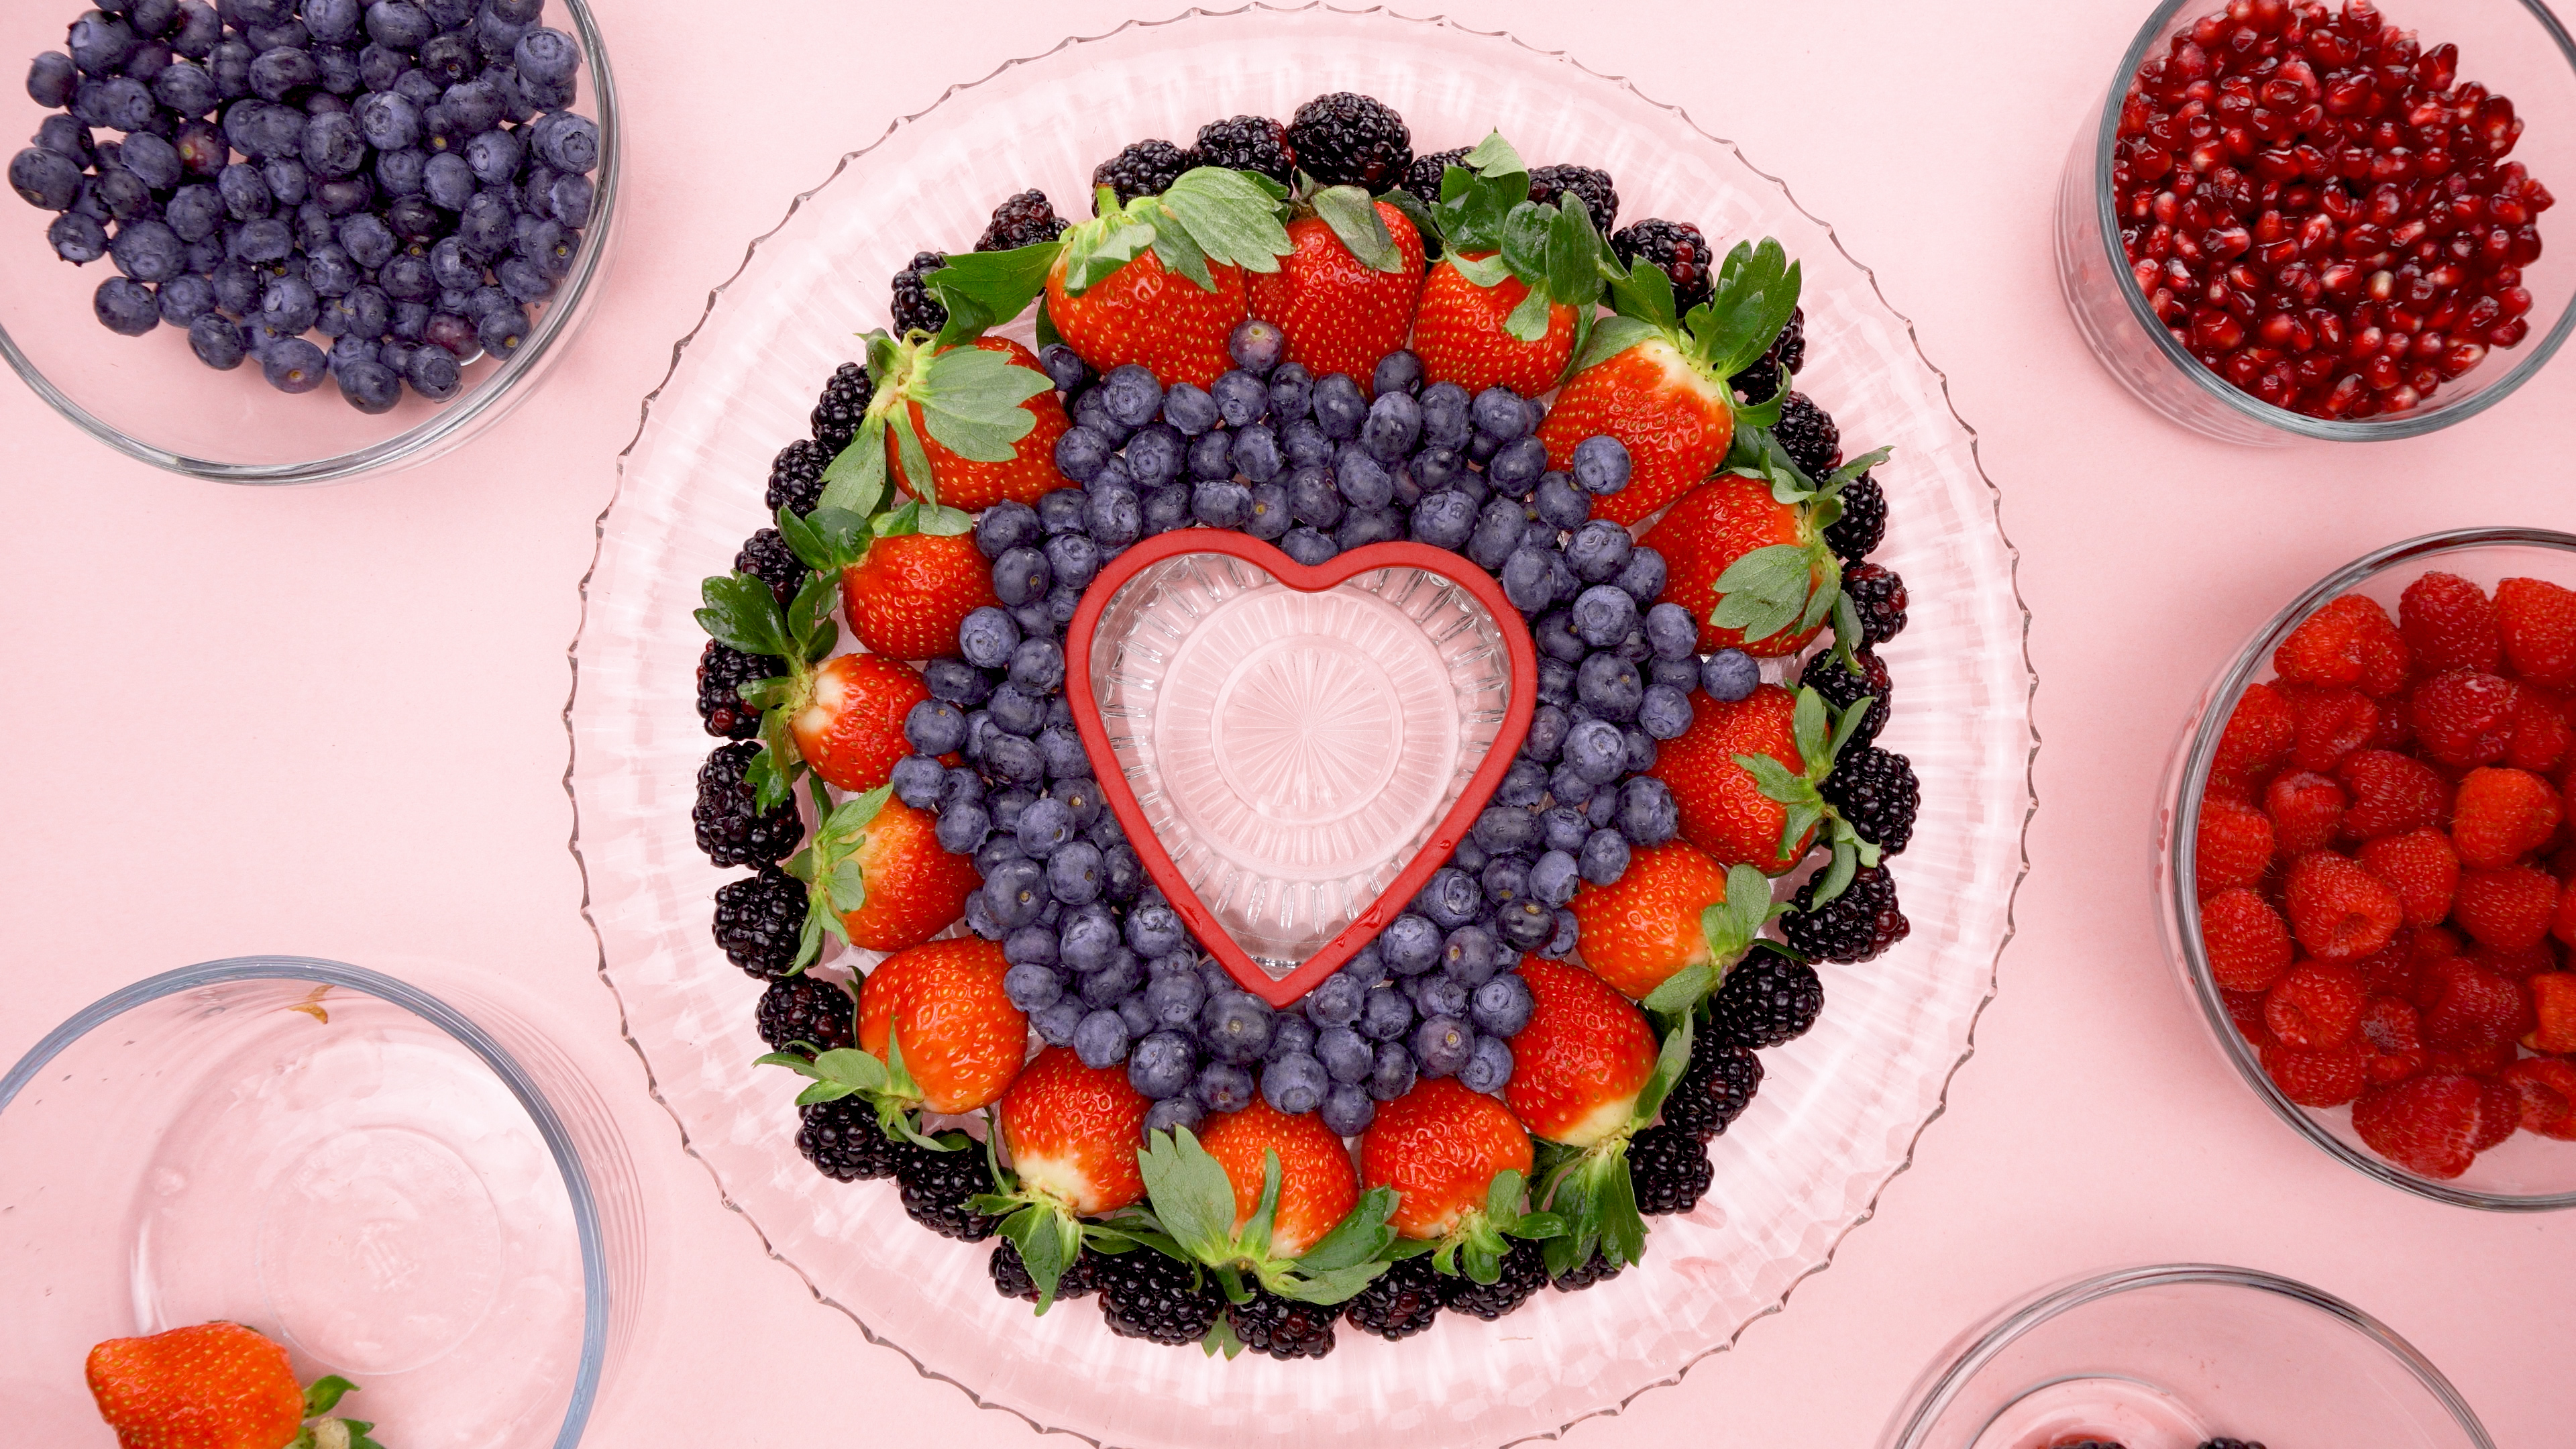 Blackberries Strawberries and blueberries around a heart cookie cutter